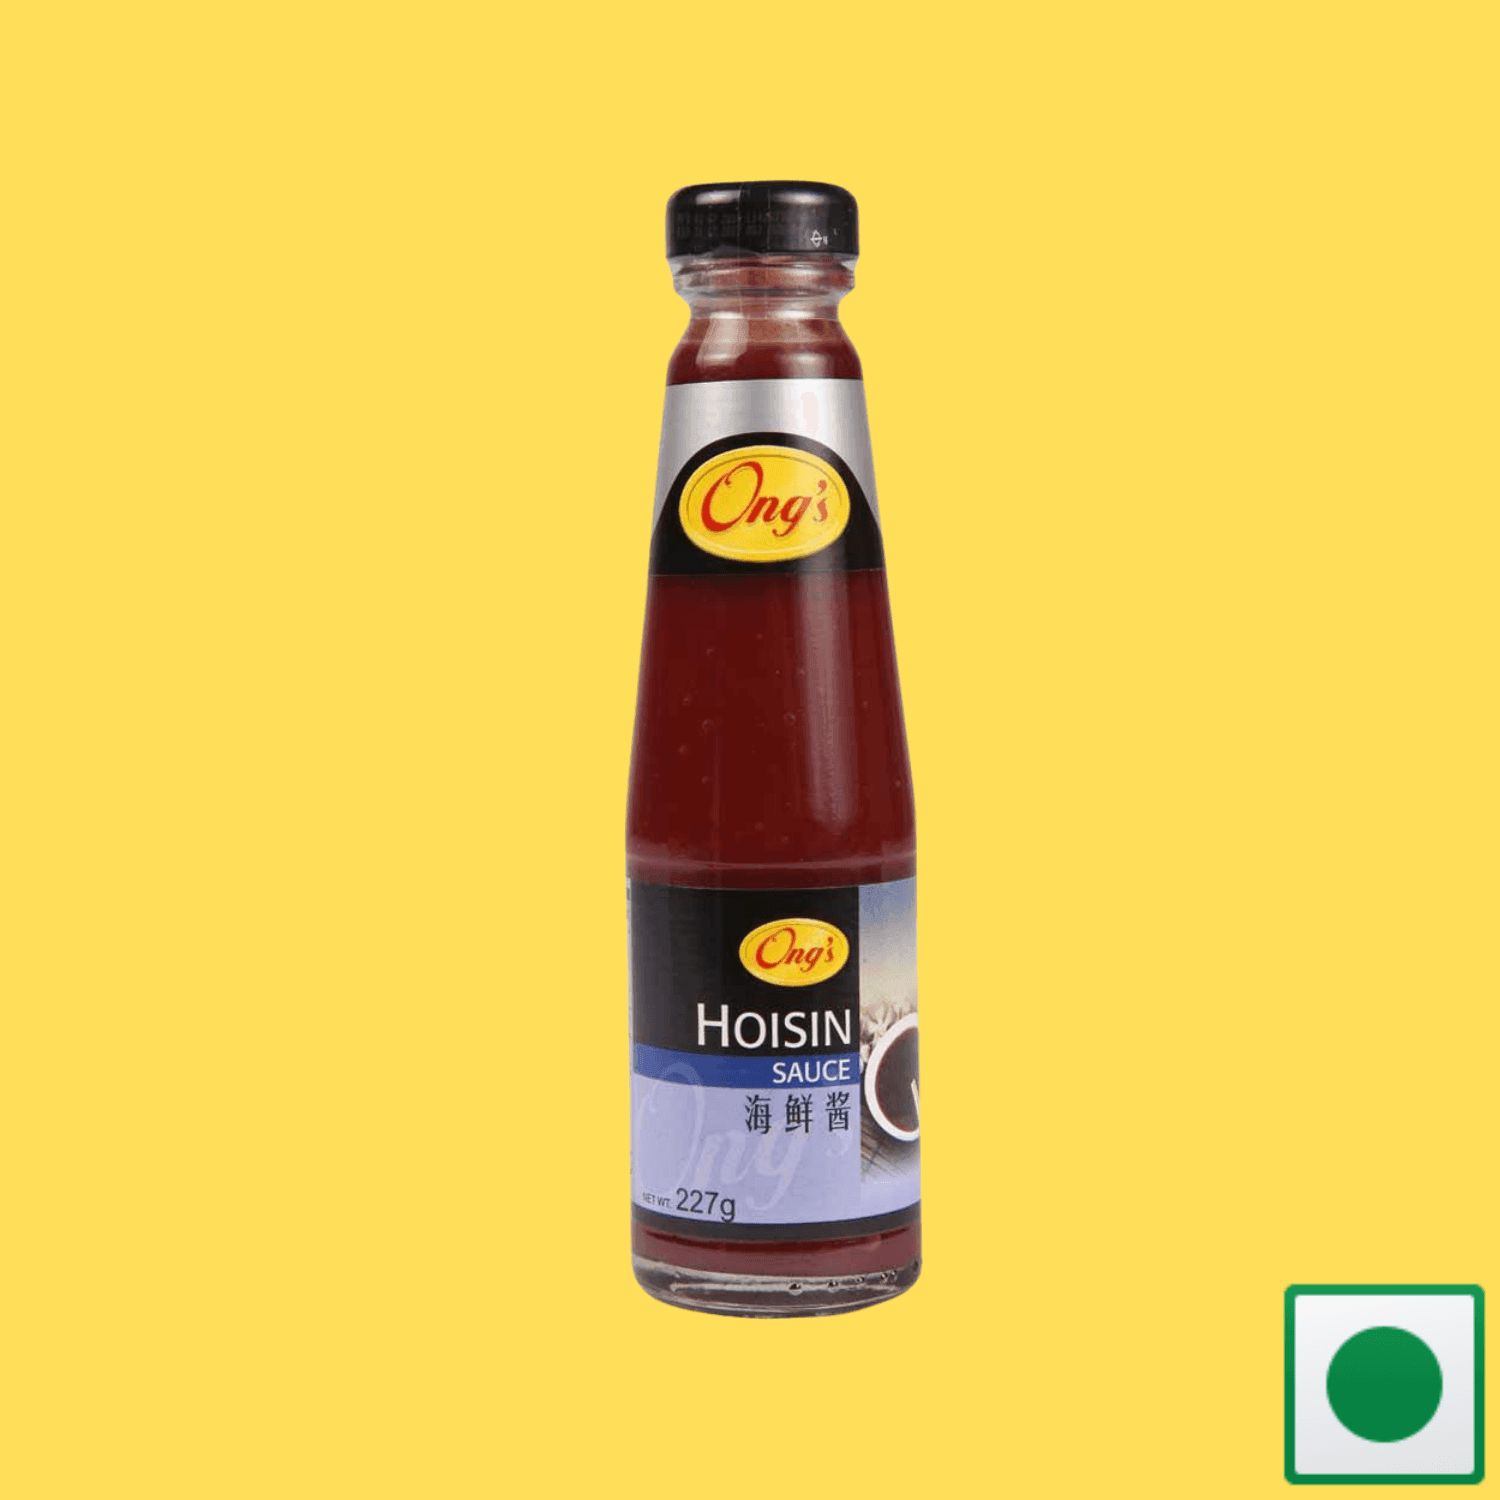 ONG's Hoisin Sauce, 227g (Imported) - Super 7 Mart